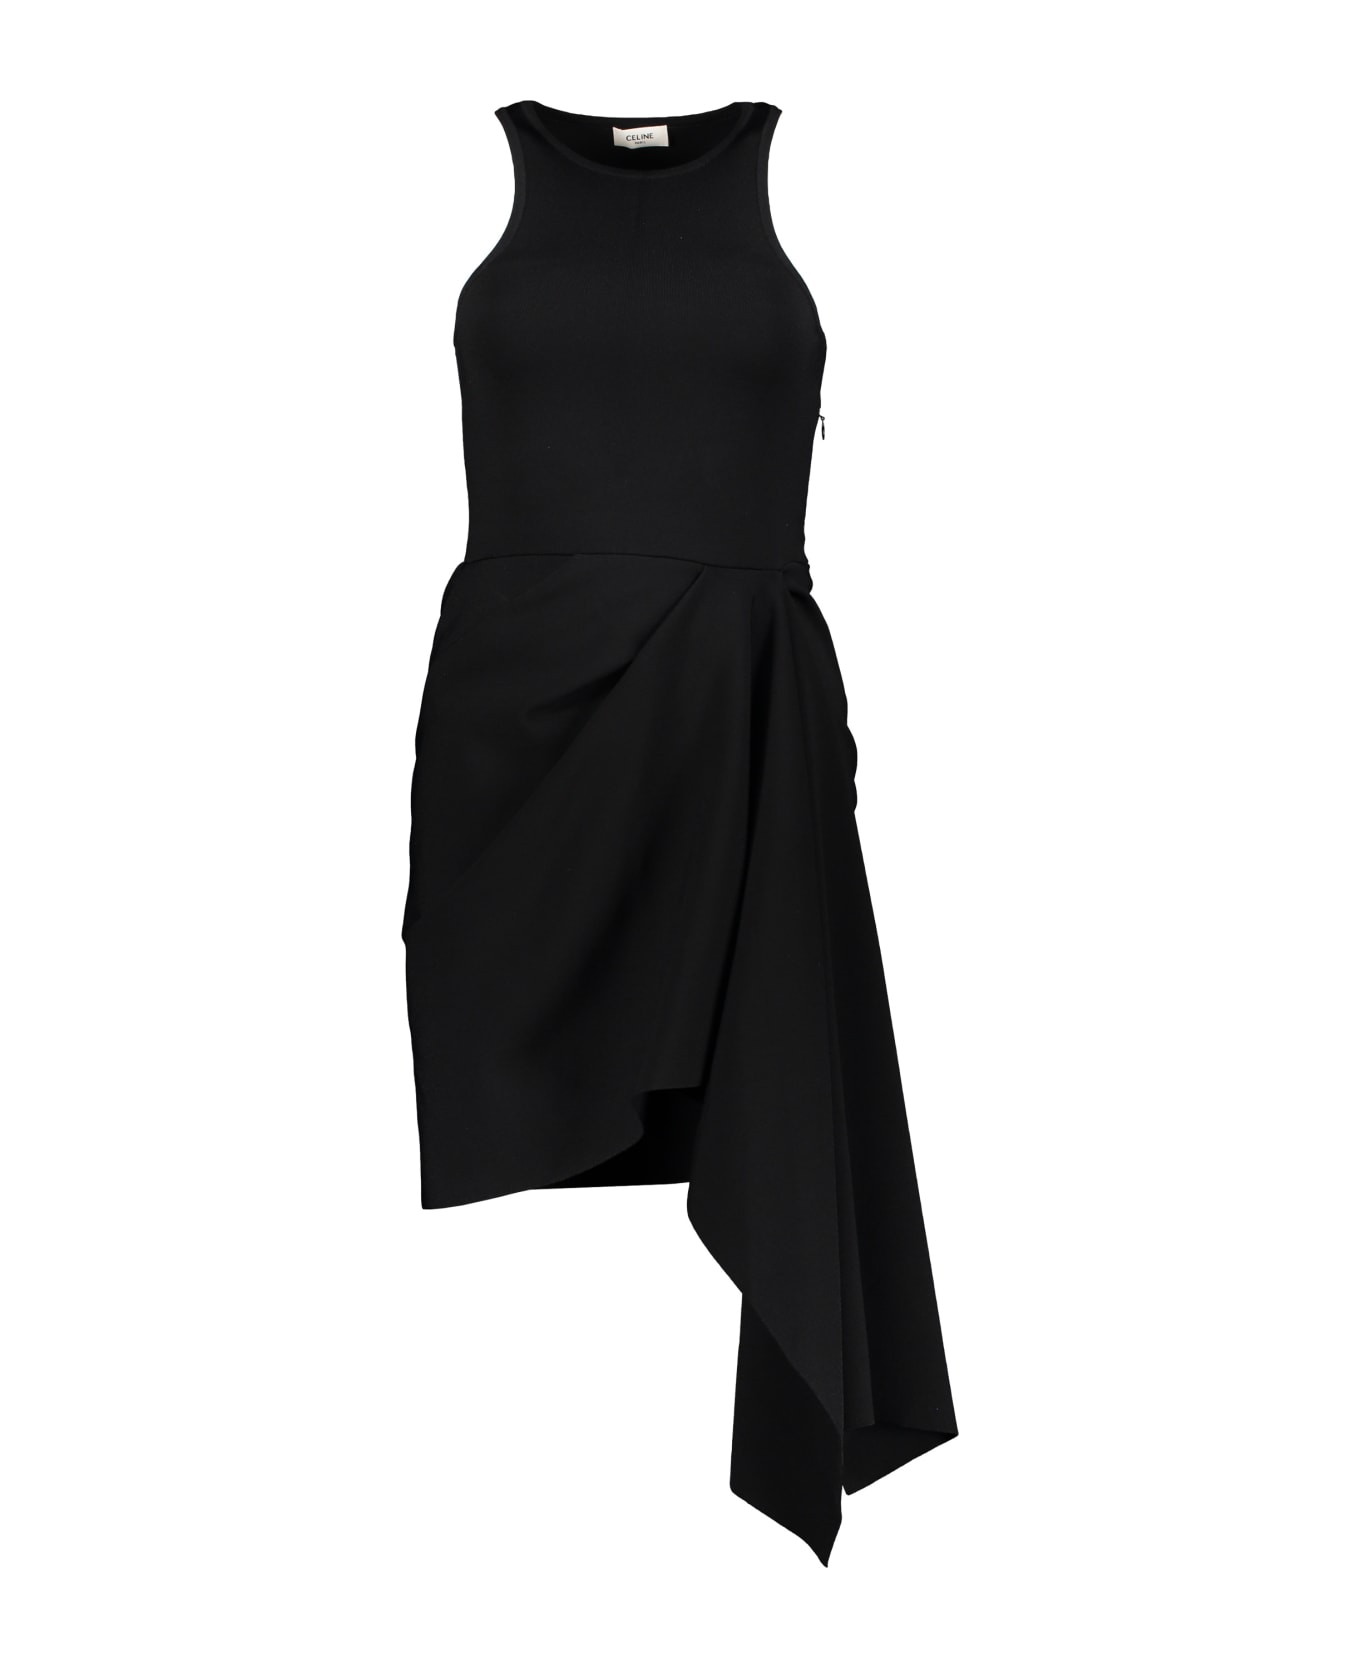 Celine Draped Dress - black